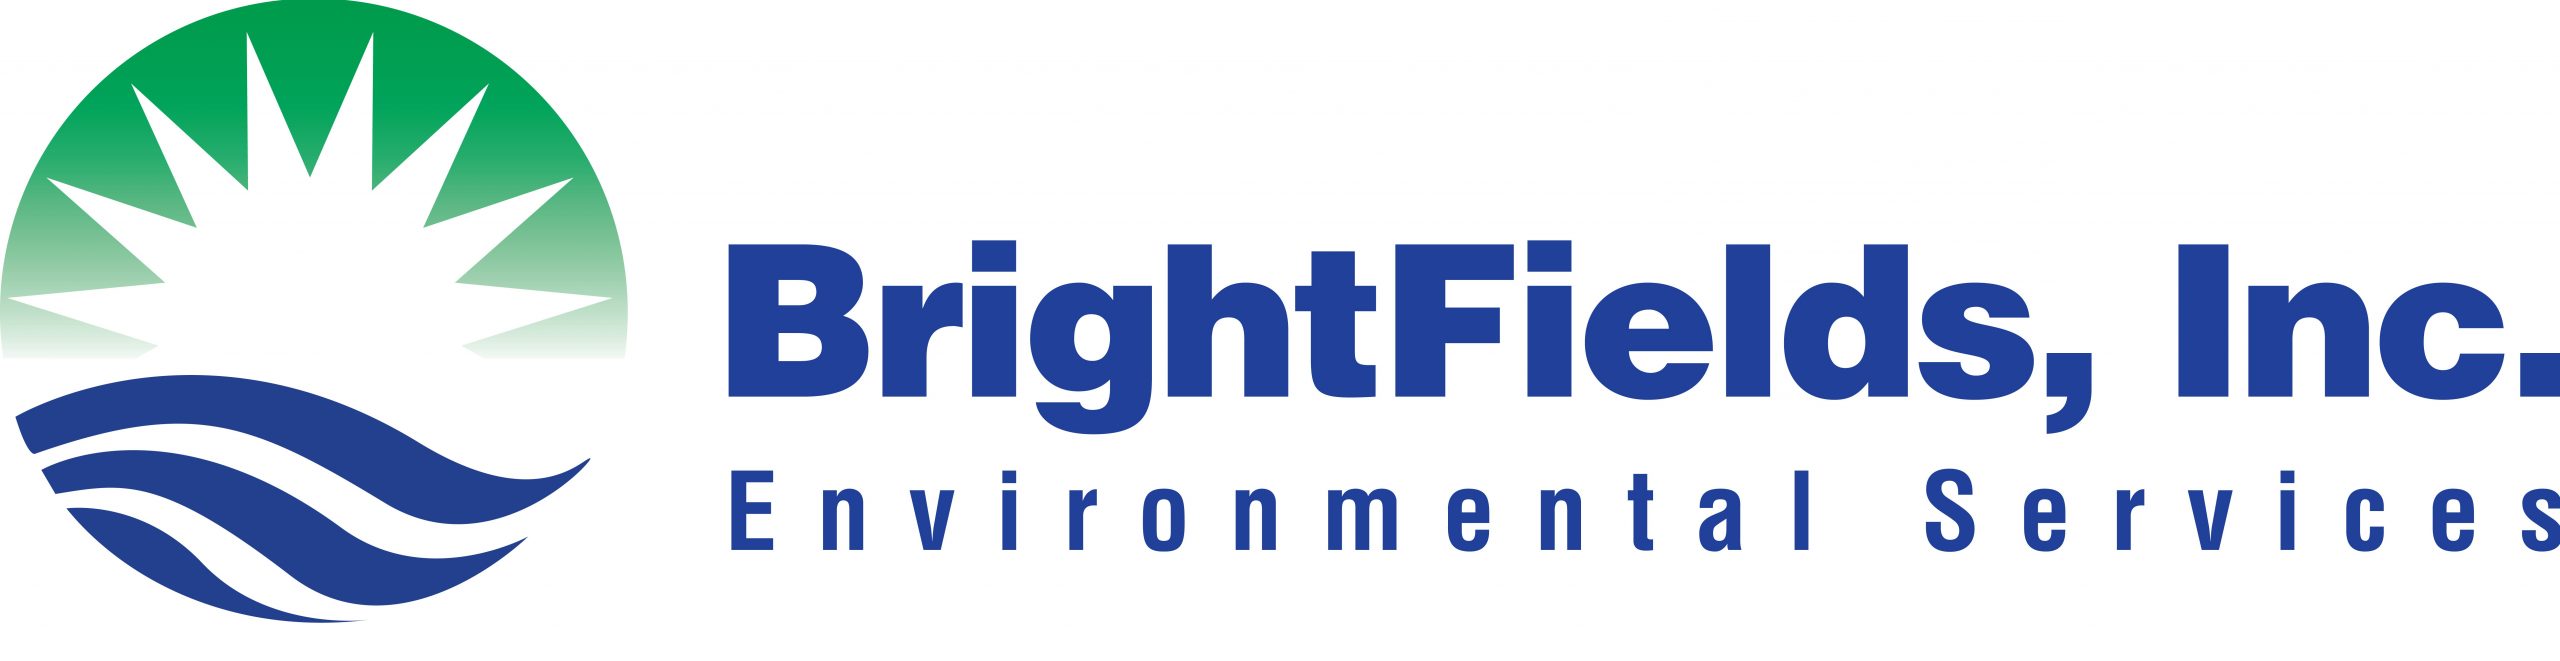 BrightFields Environmental Services logo